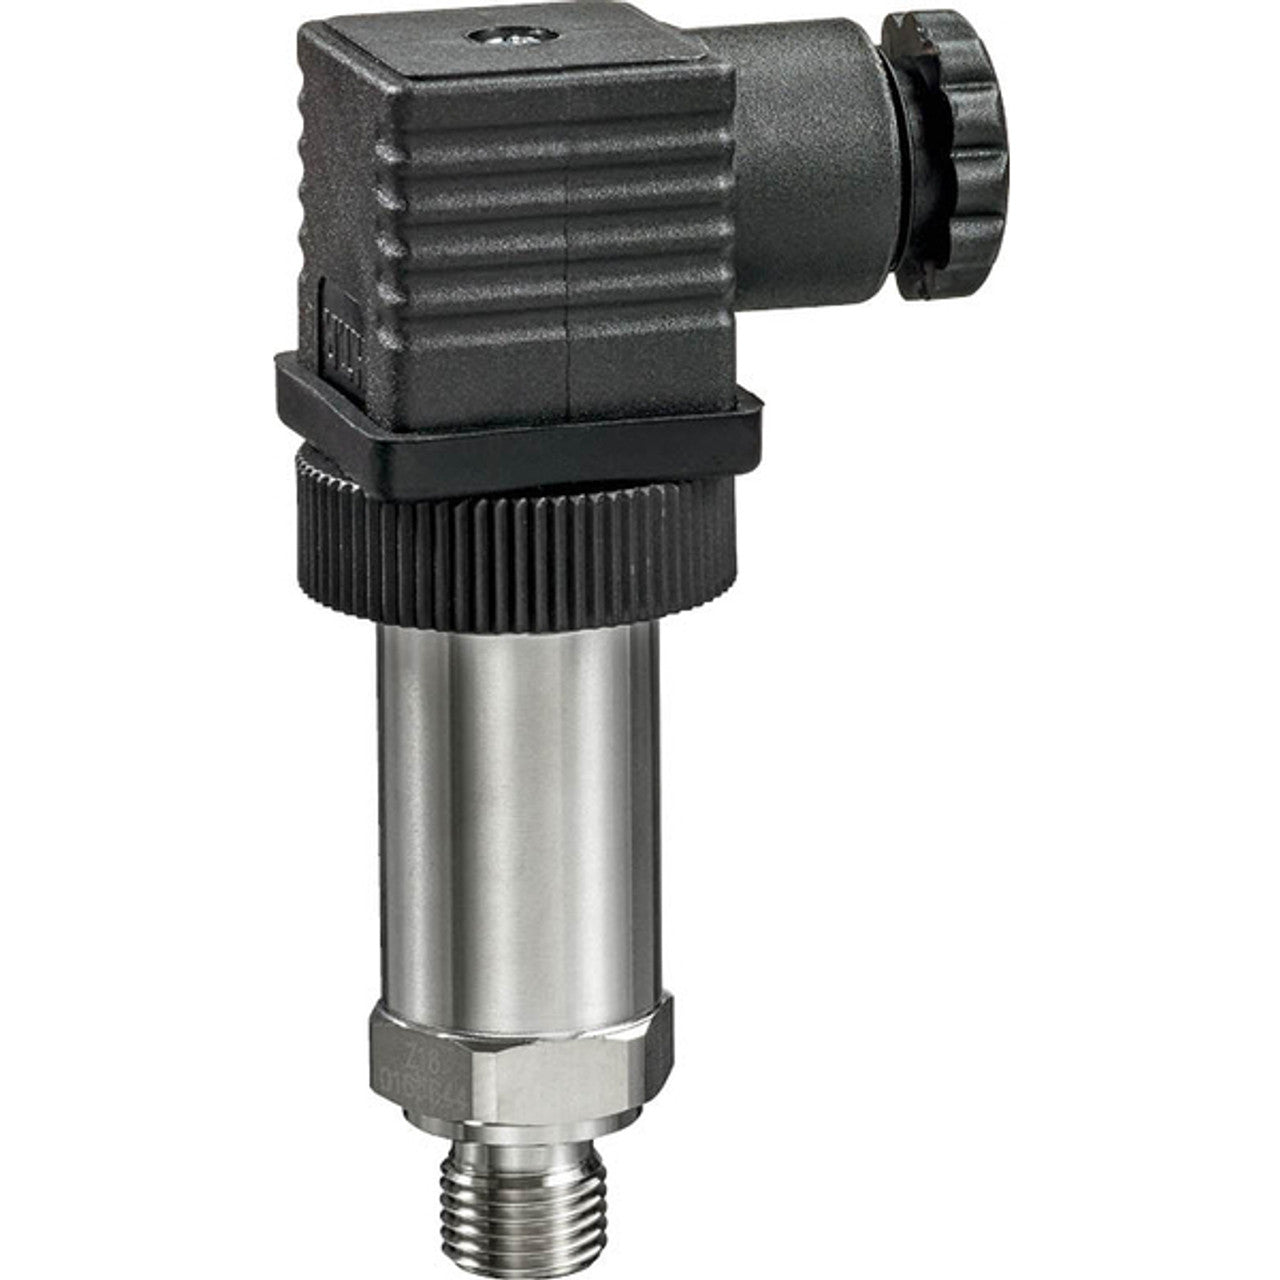 Belimo Water Pressure Sensor 0-6bar 4-20mA 22WP-135 HVAC Retrofit Parts